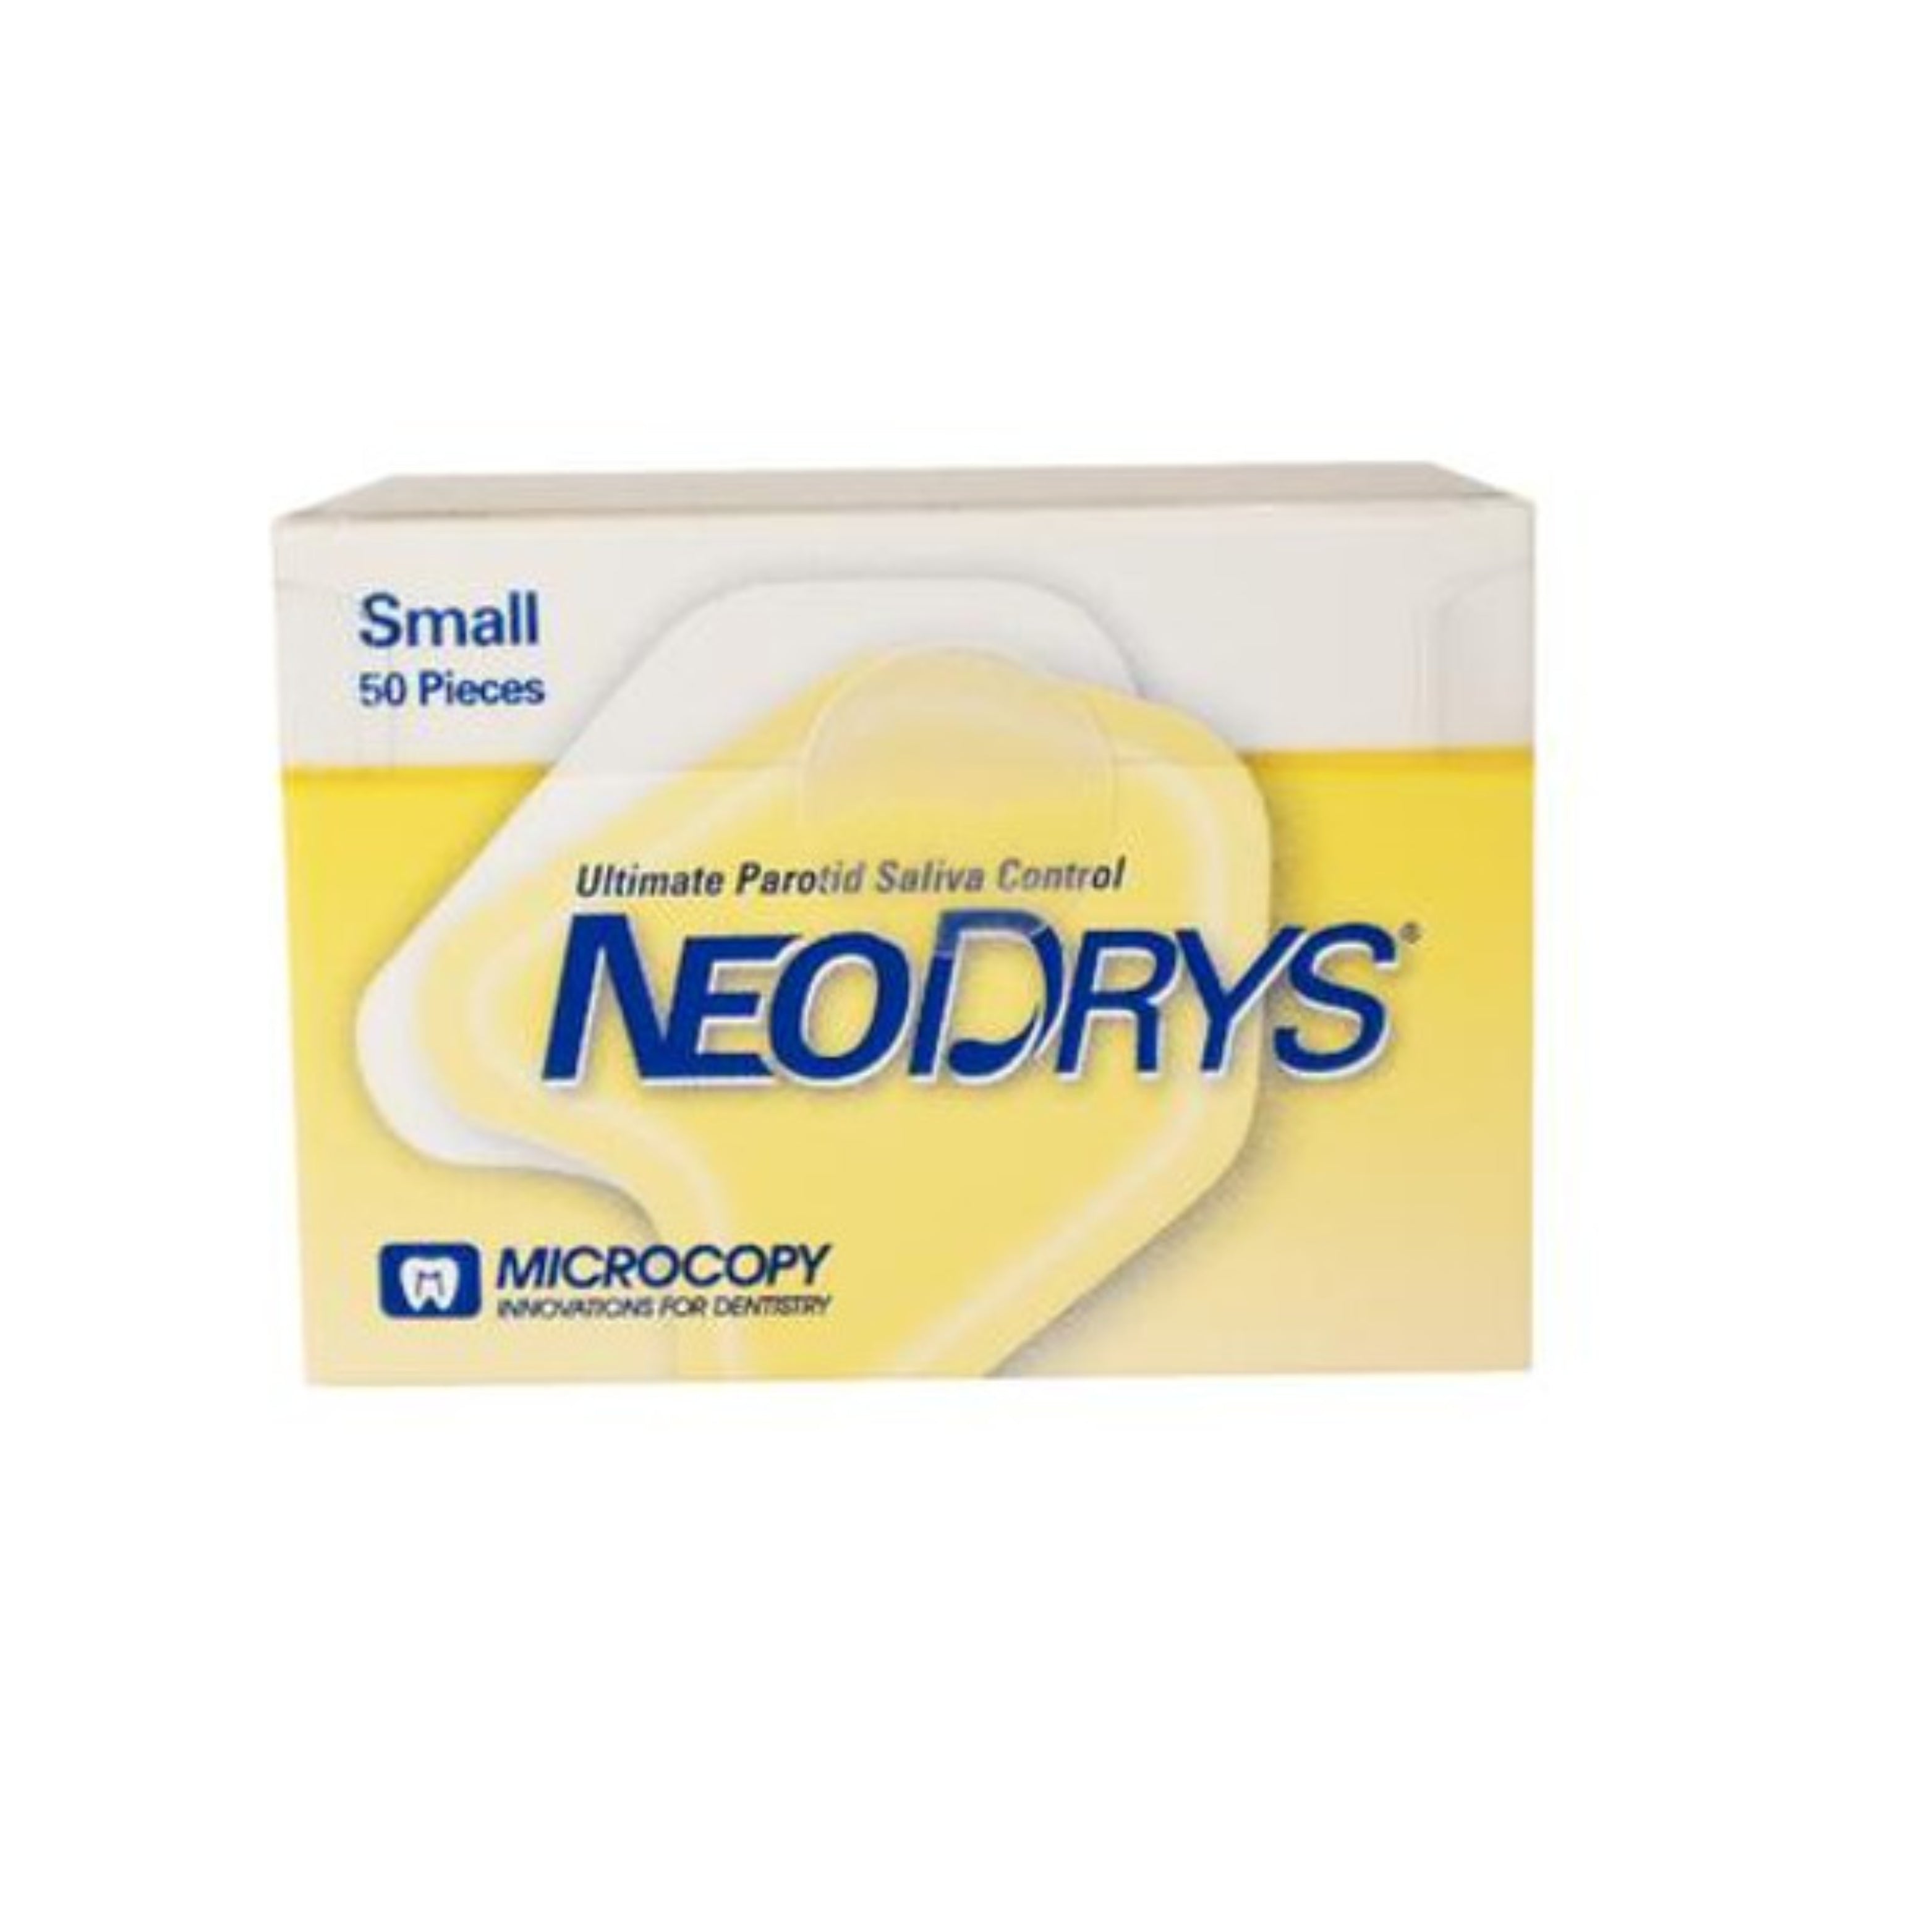 small-microcopy-neodrys-saliva-absorbents-yellow-50box